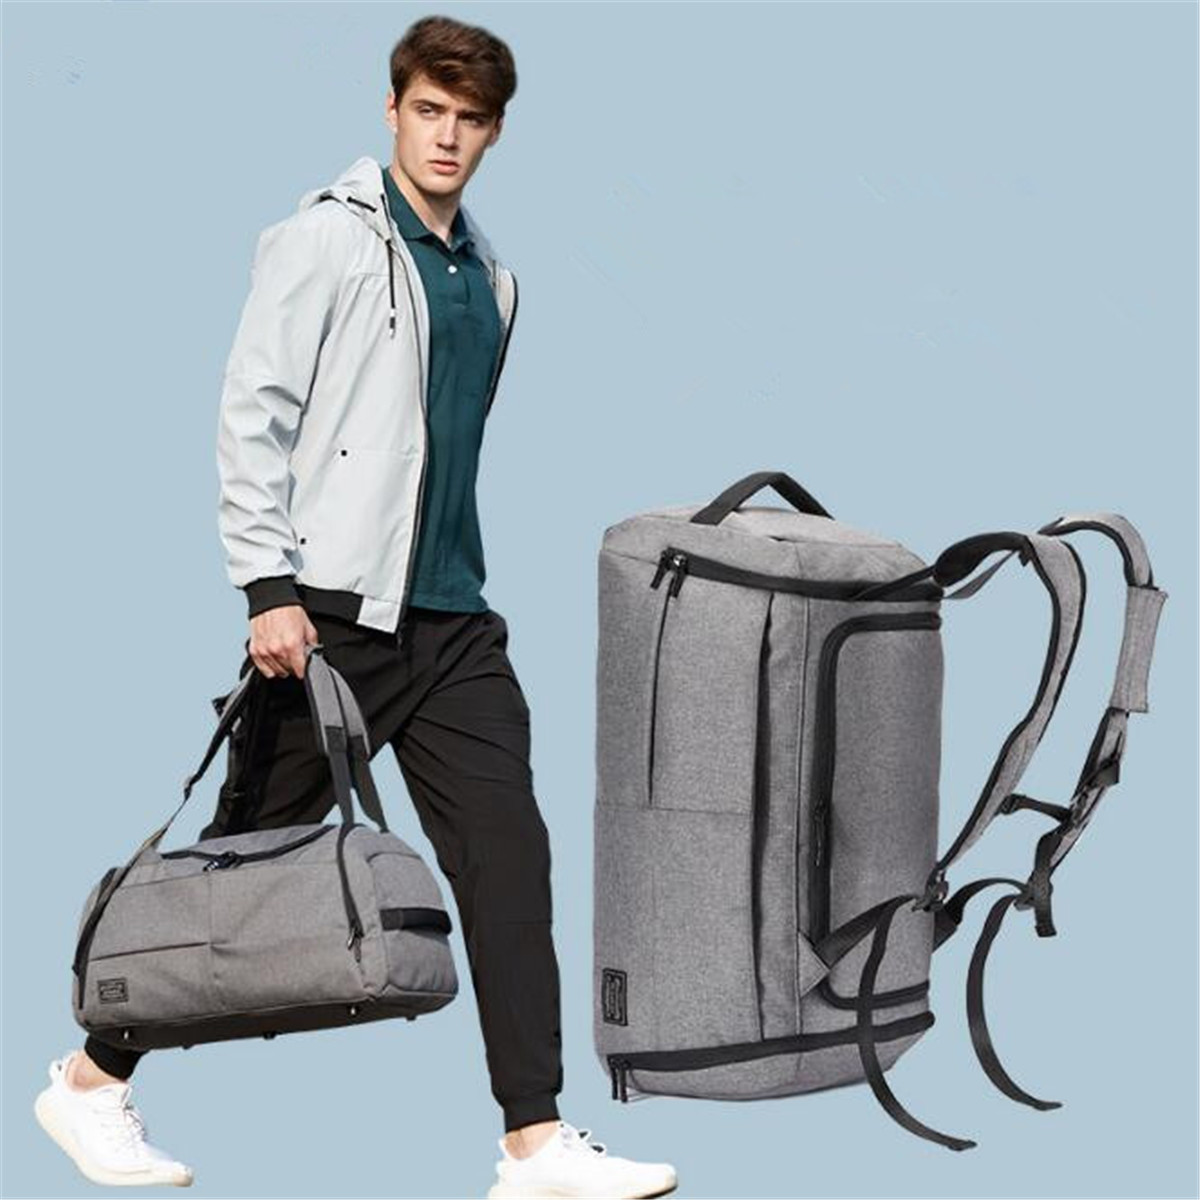 Outdoor-Men-Women-Luggage-Travel-Bag-Satchel-Shoulder-Gym-Sports-Handbag-with-Shoes-Storage-1279187-9